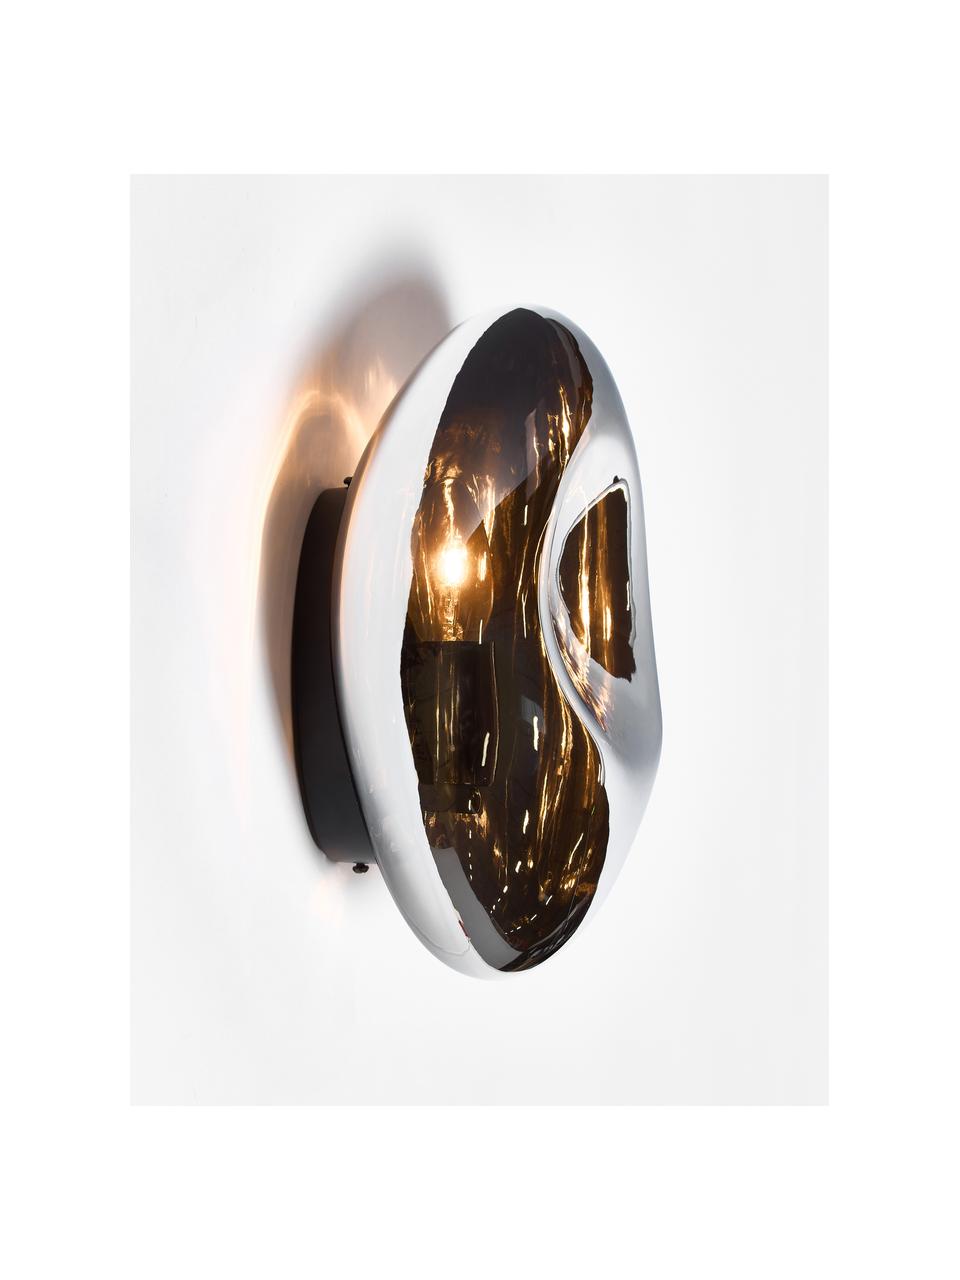 Mondgeblazen wandlamp Mabell, Lamp: mondgeblazen glas, Zilverkleurig, B 28 x D 13 cm